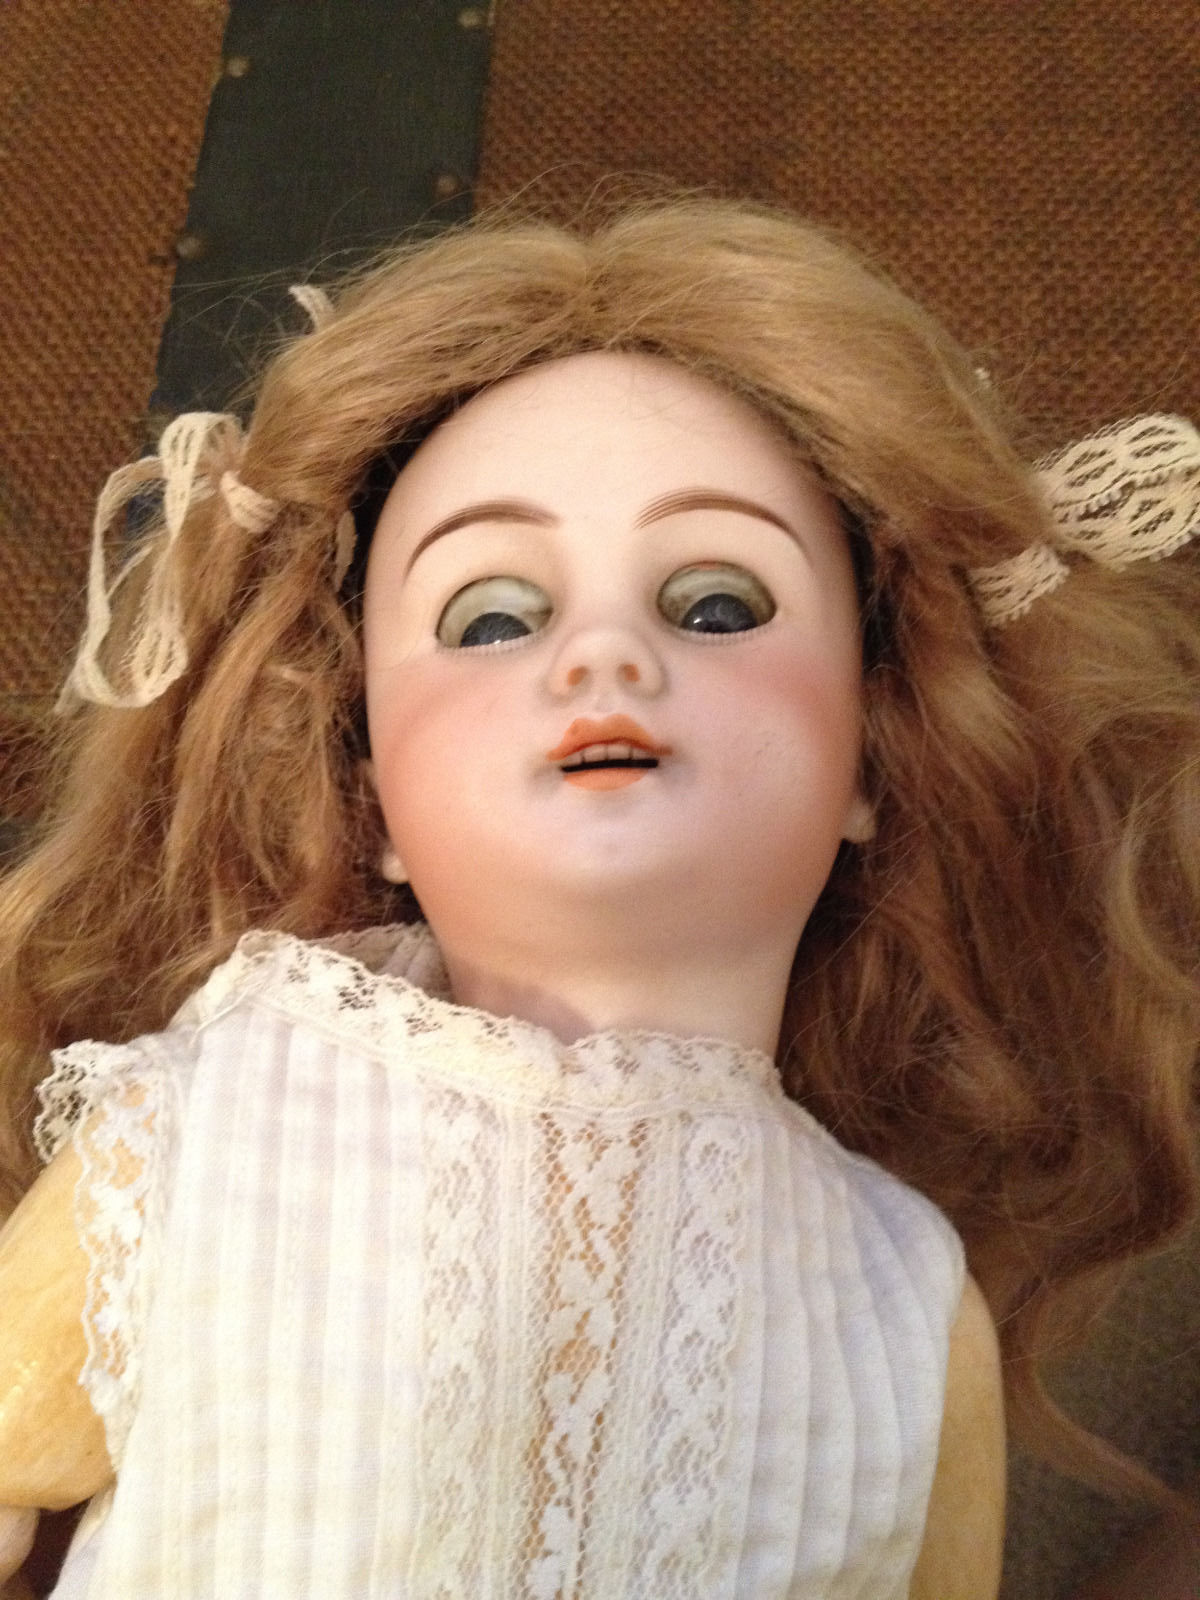 Jumeau Antique Doll Reproduction Bisque Doll